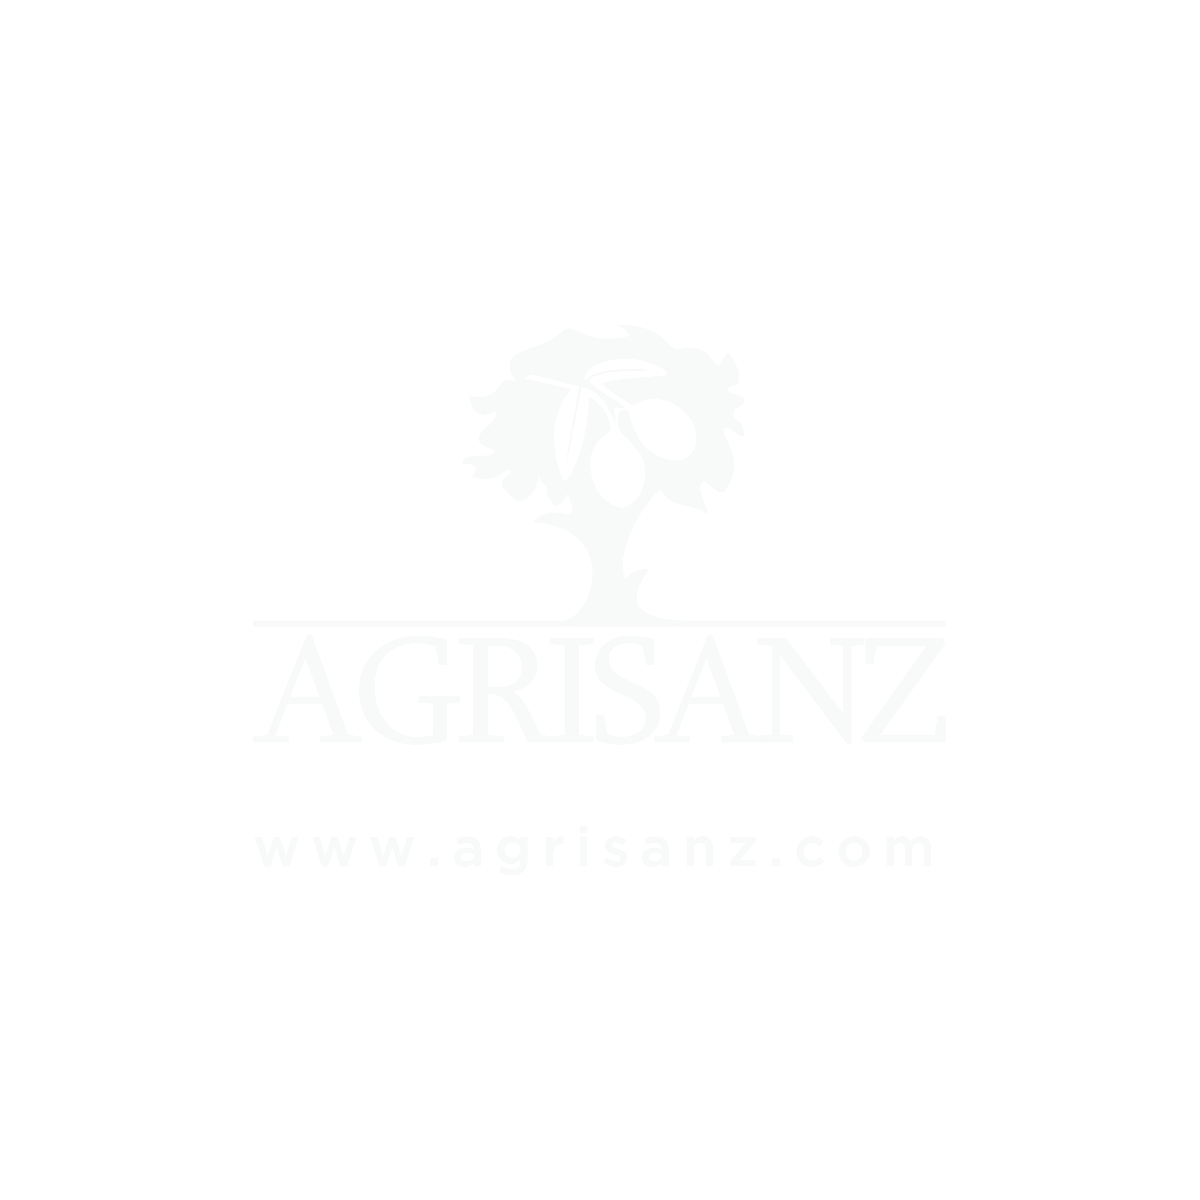 Agisanz company logo